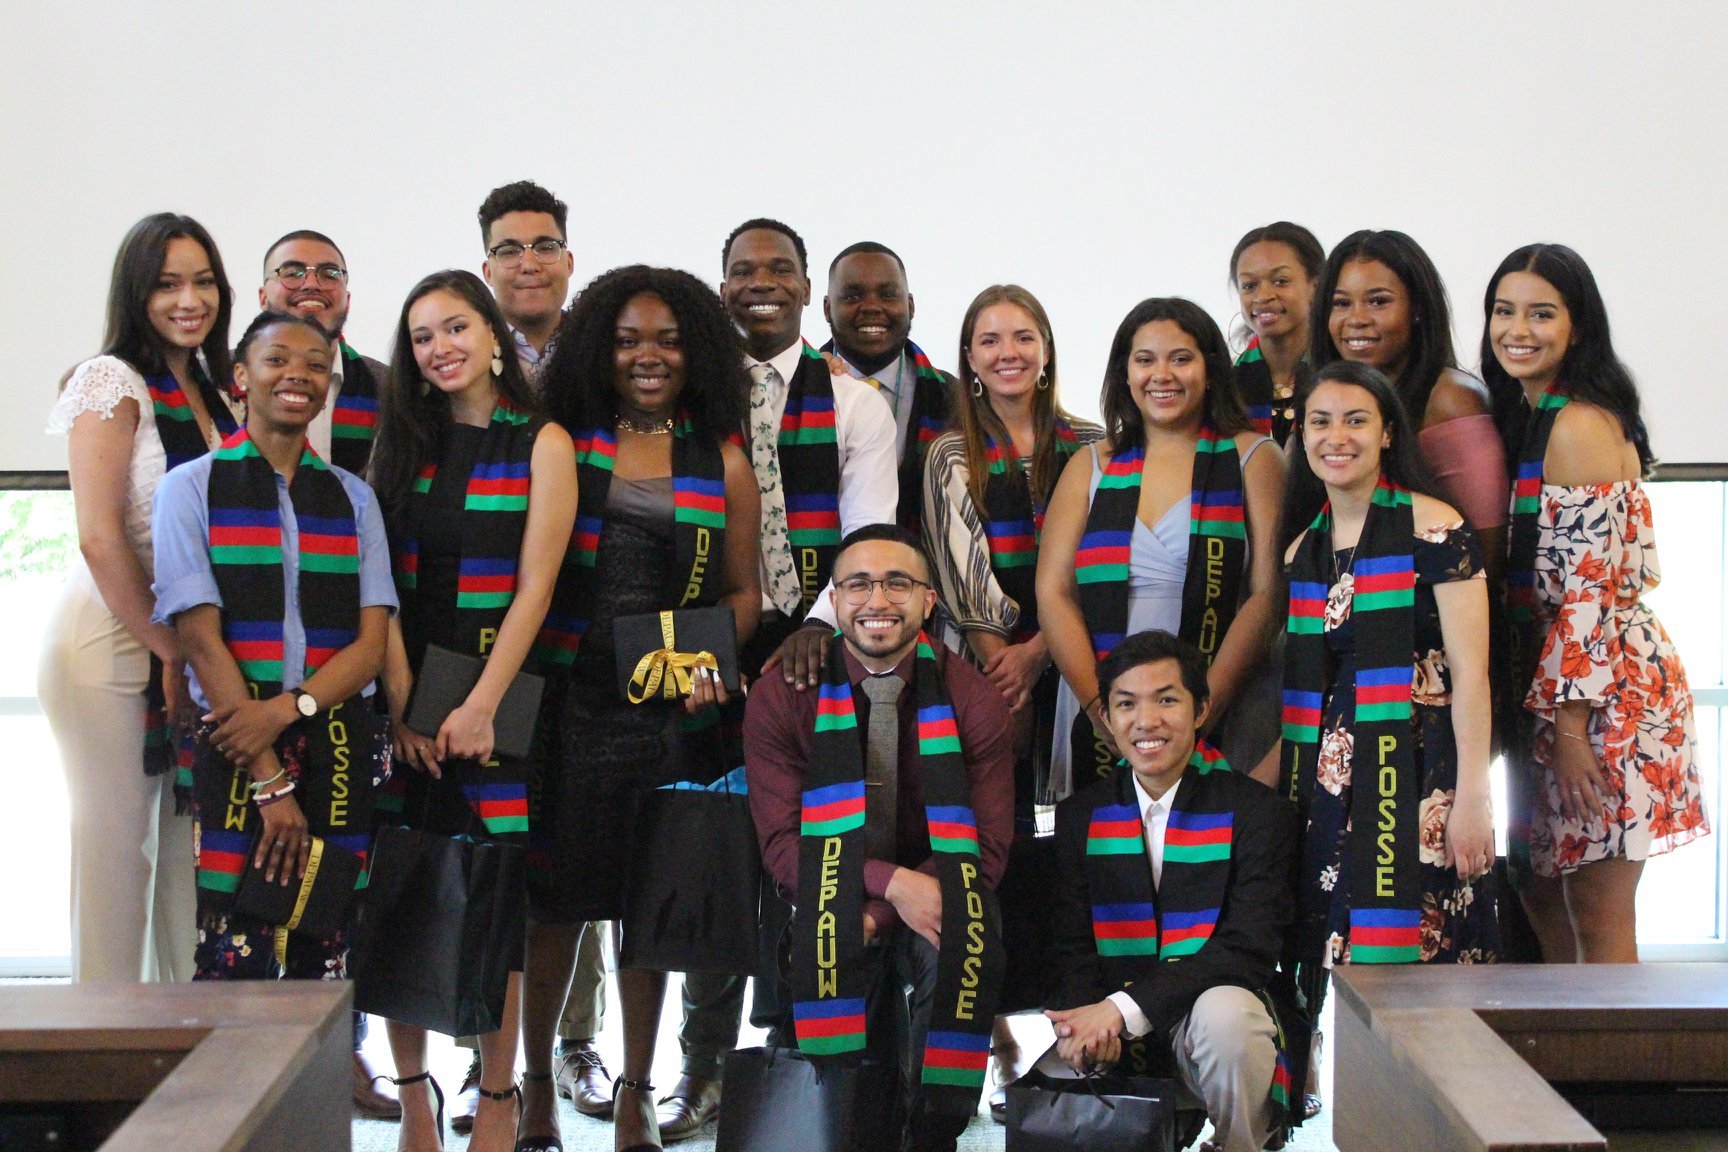 Class of 2019 DePauw University Posse graduates from Chicago and New York.